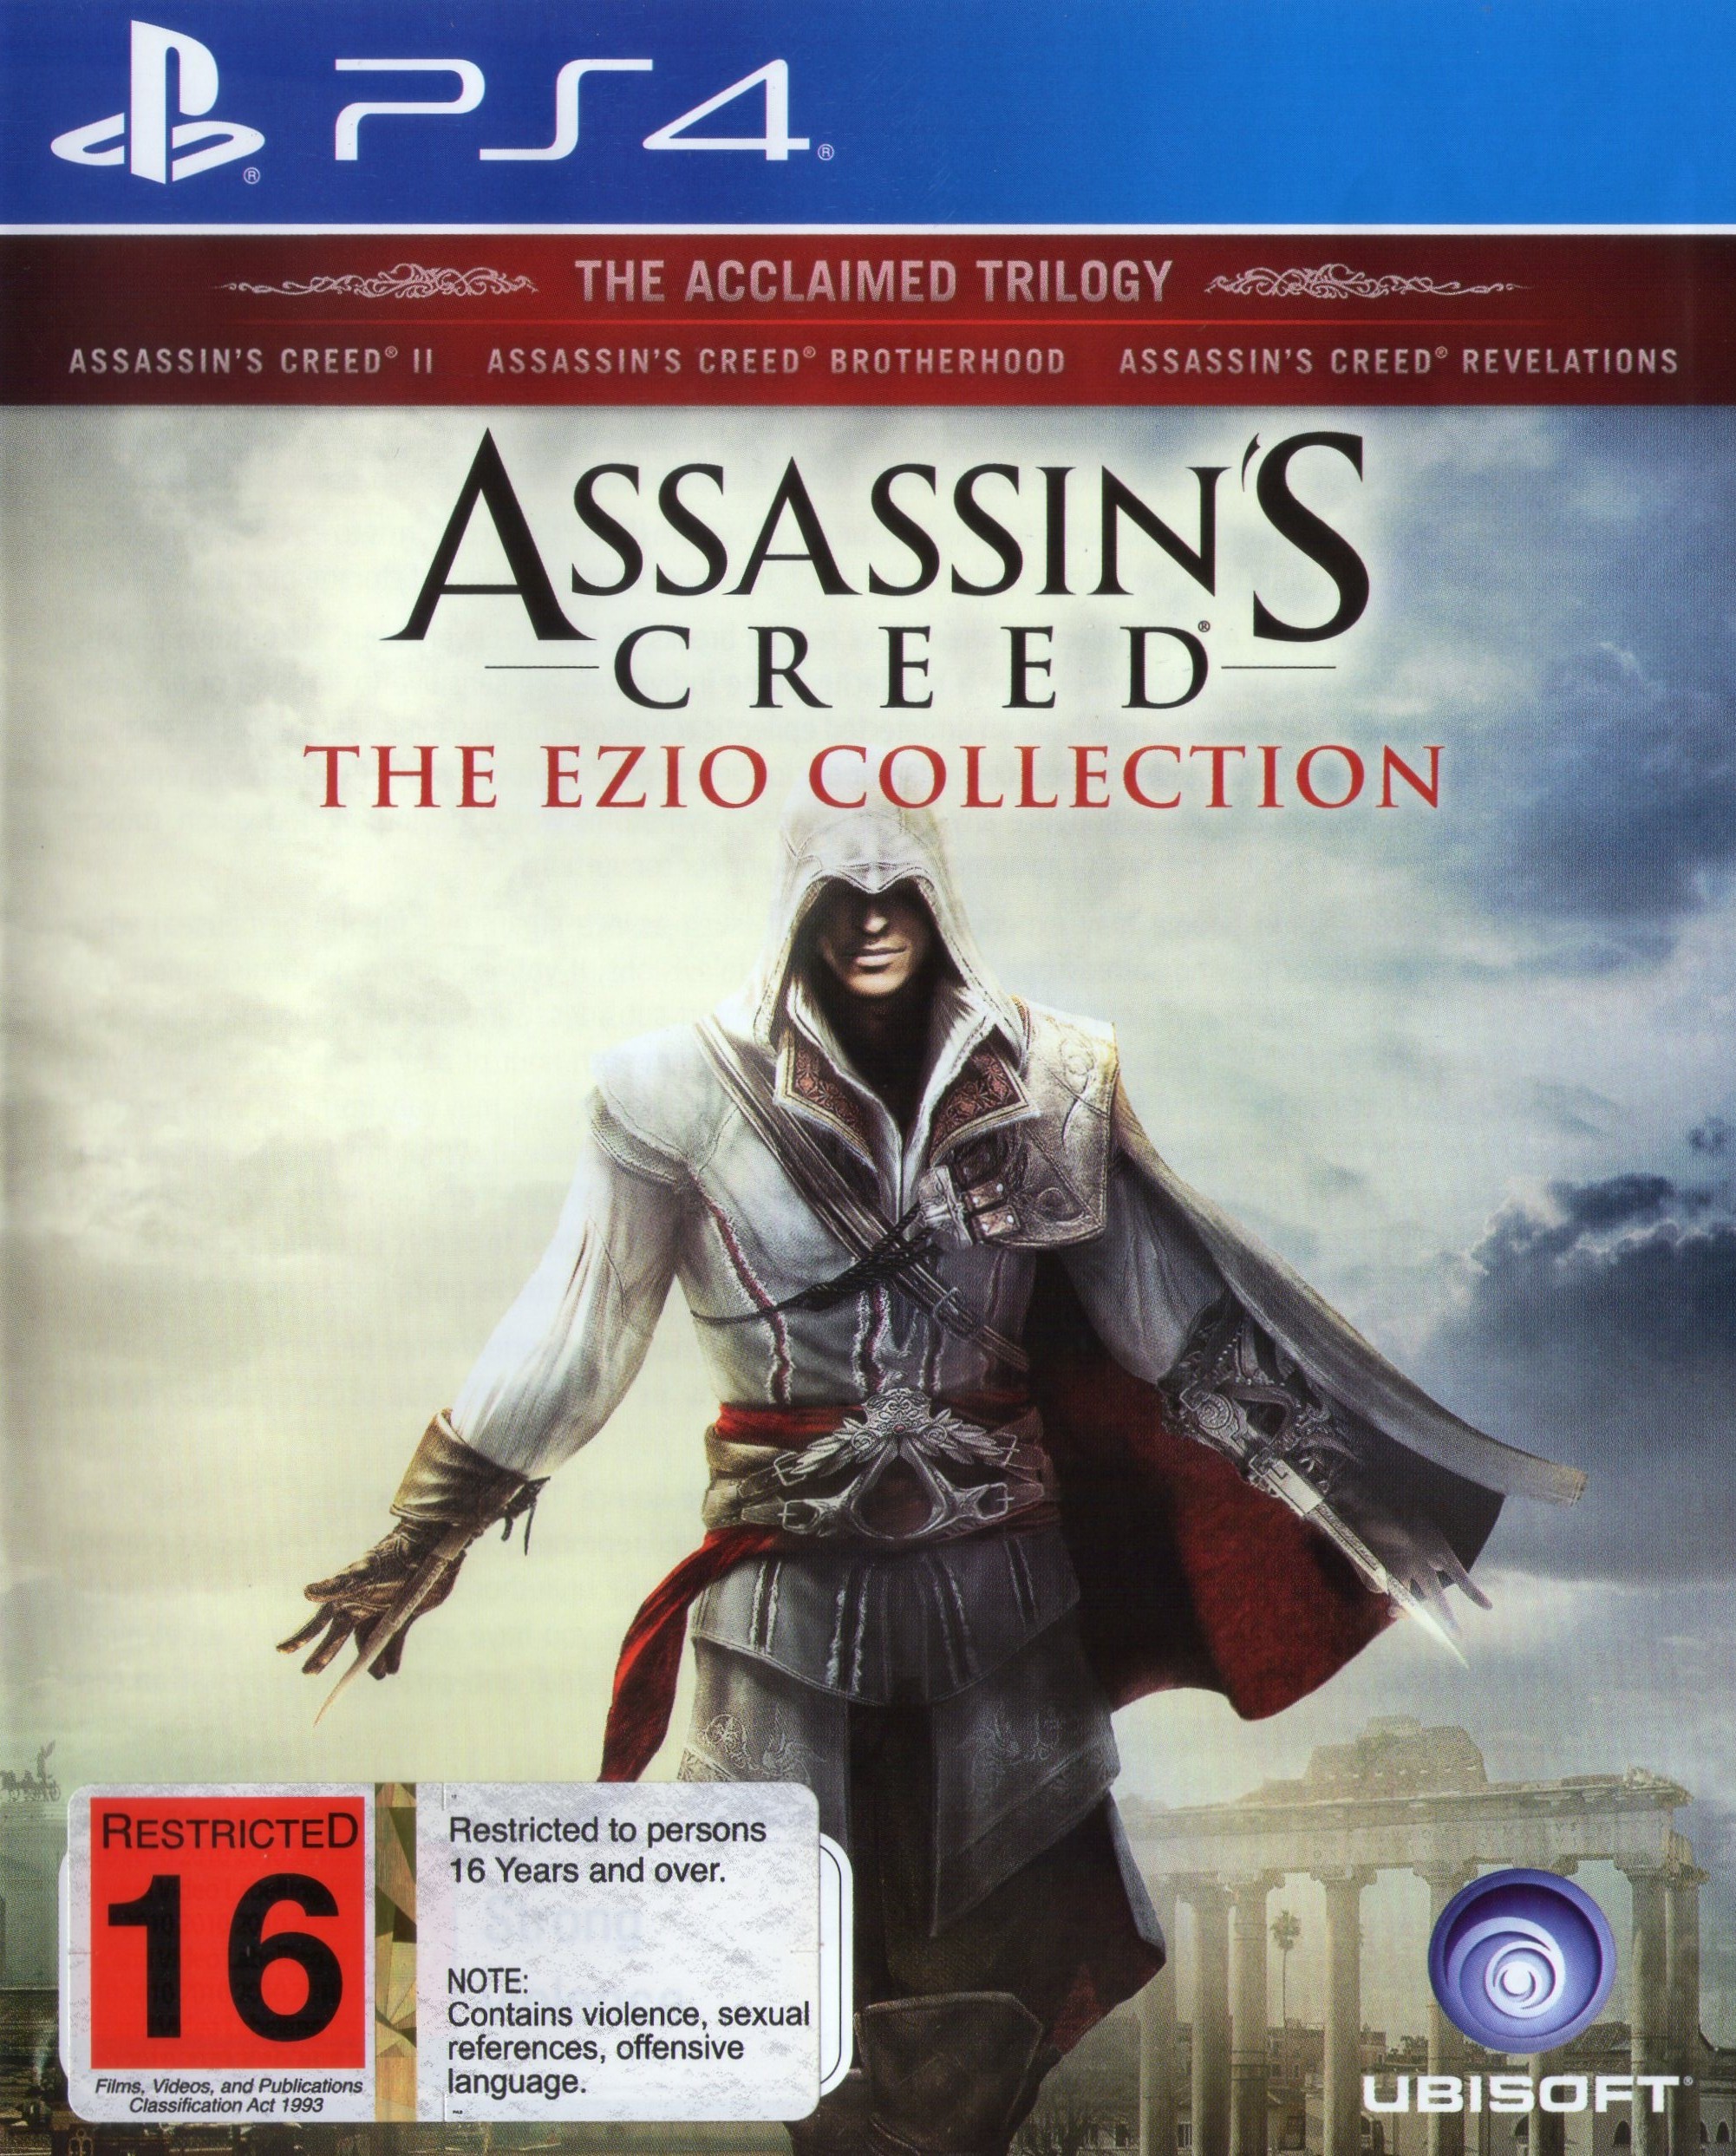 'Assassin's Creed: The Ezio Collection'